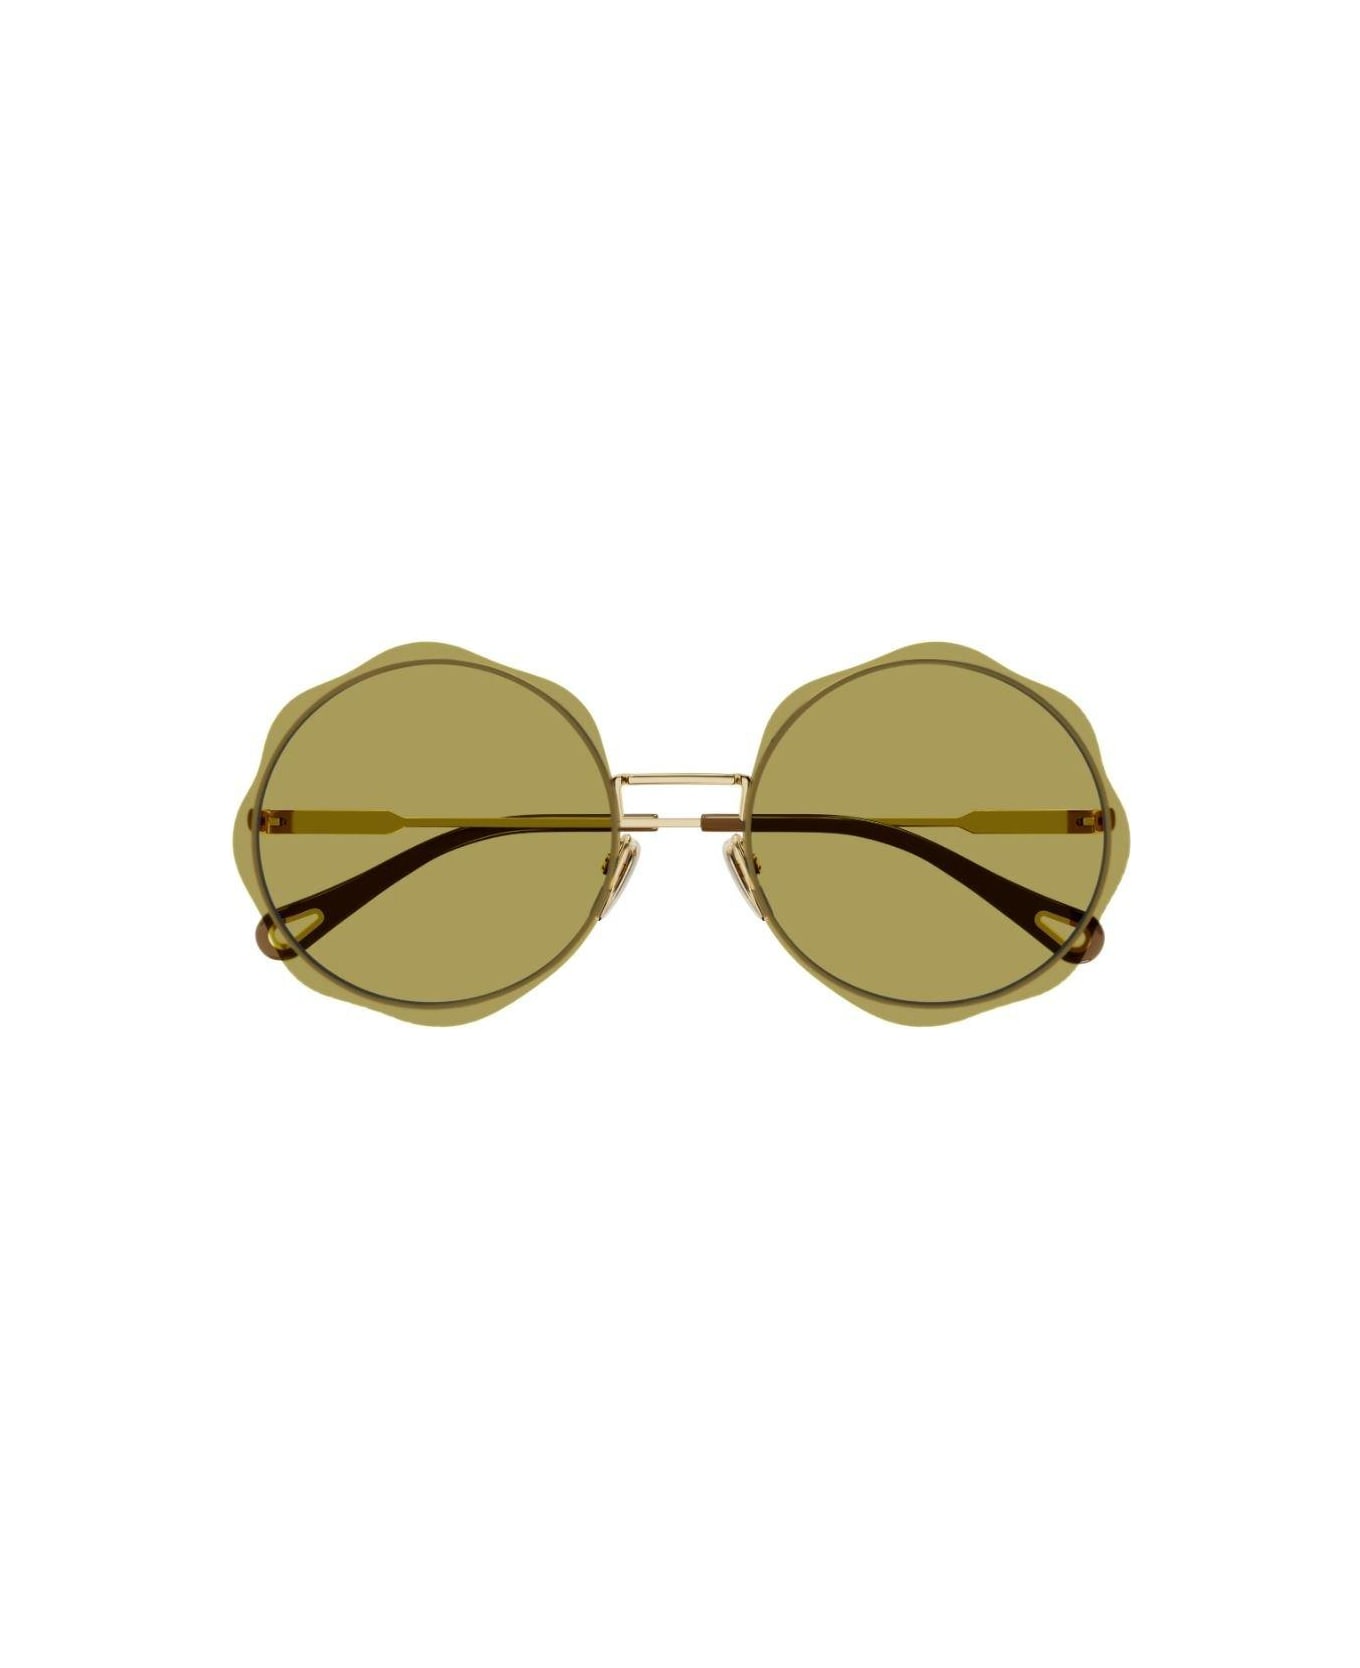 Chloé Honore Sunglasses - Gold/green